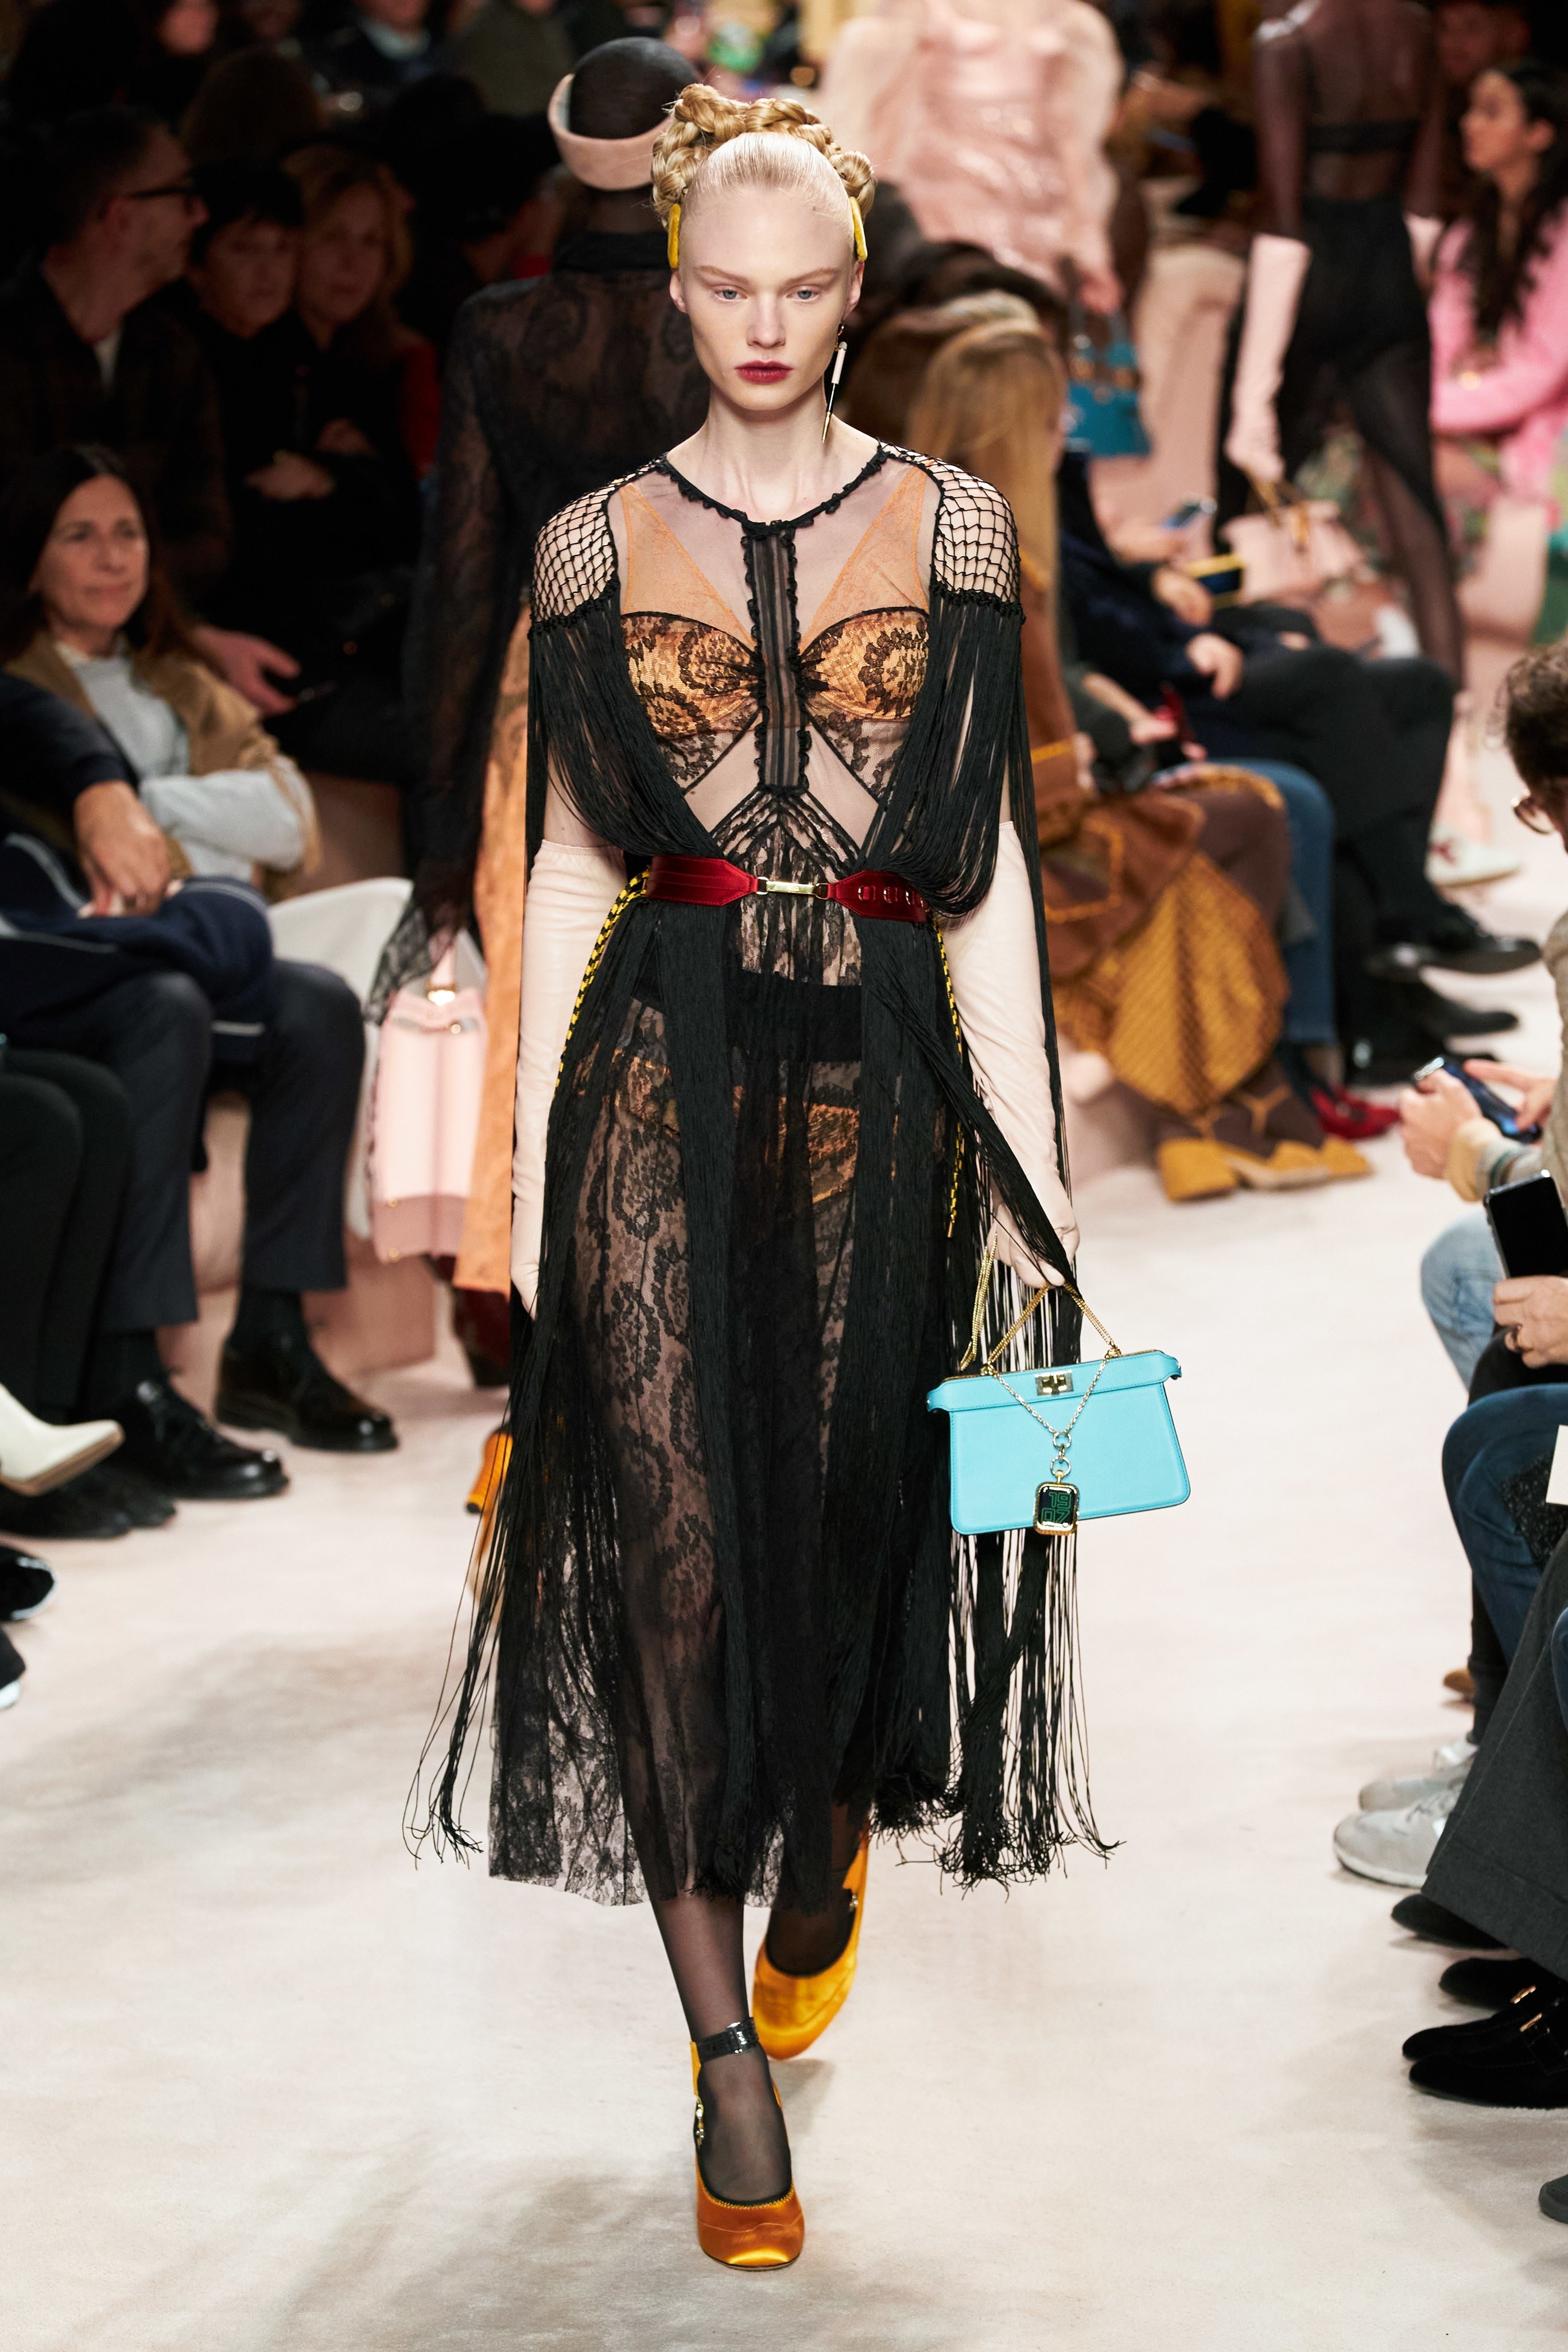 fendi fall 2020 ready to wear Milan fashion show